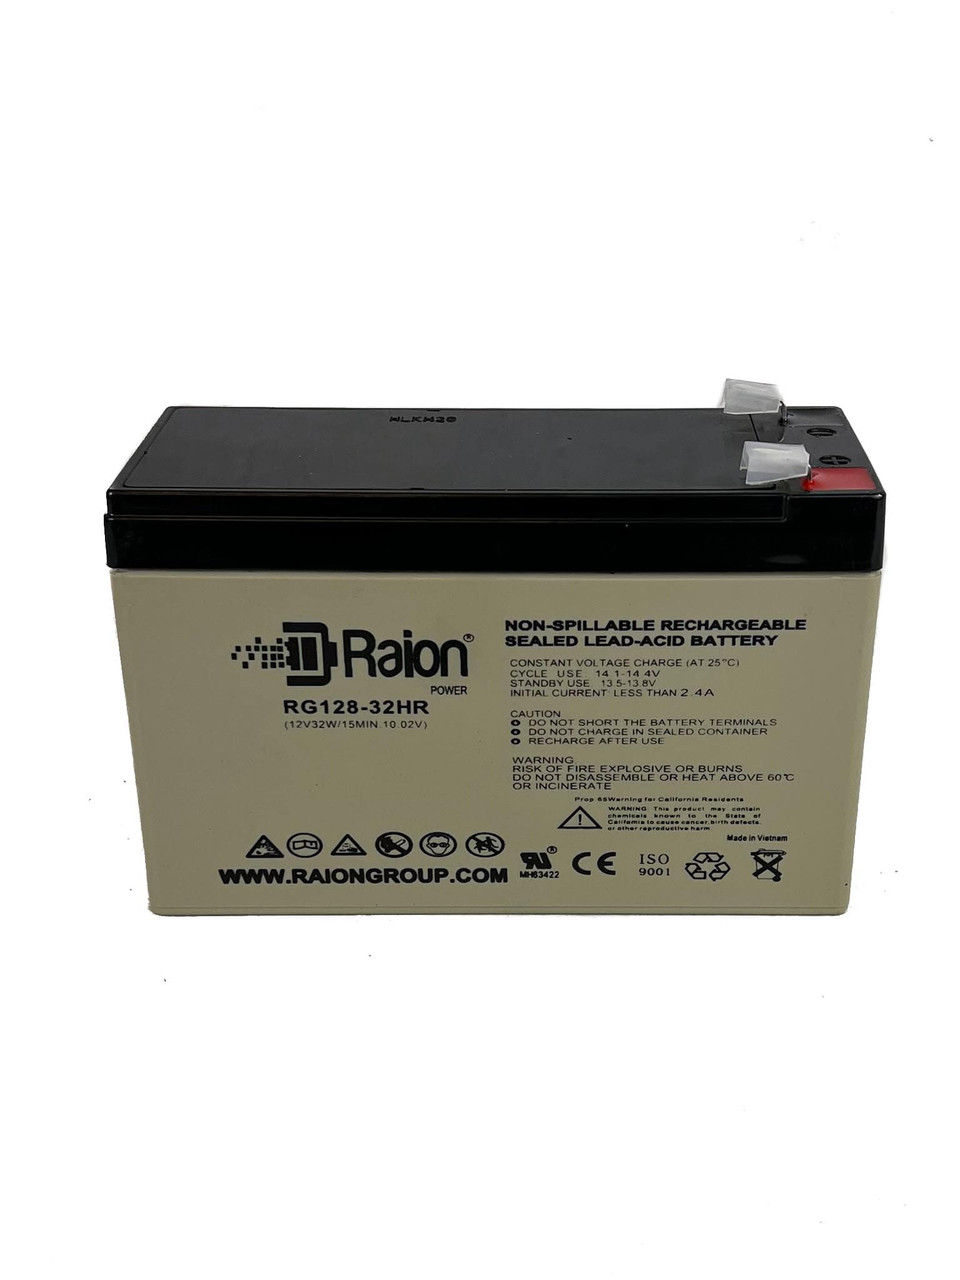 Raion Power RG128-32HR Replacement High Rate Battery Cartridge for APC Back-UPS Pro USB 350VA 120V BP350U